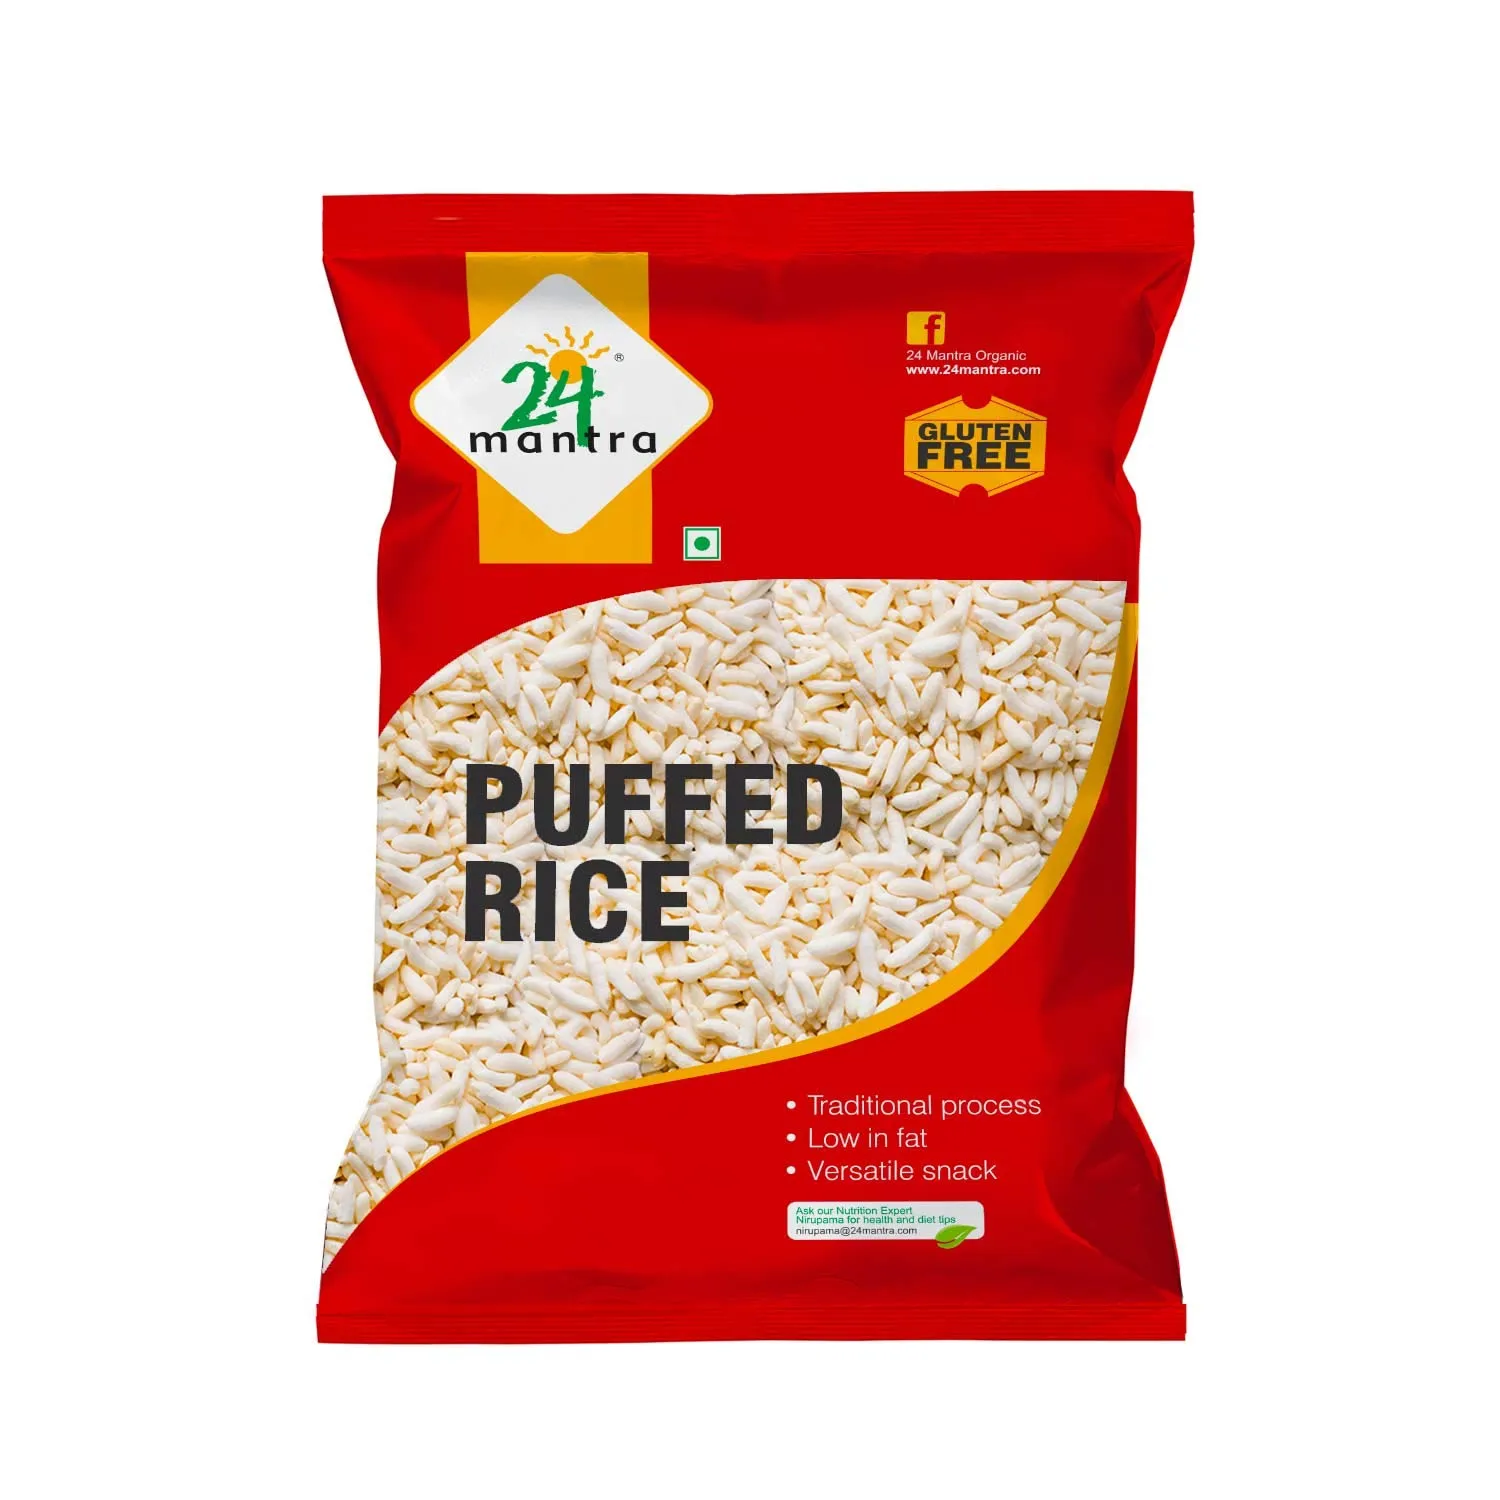 24 Mantra Puffed Rice – Gluten Free 200 GM